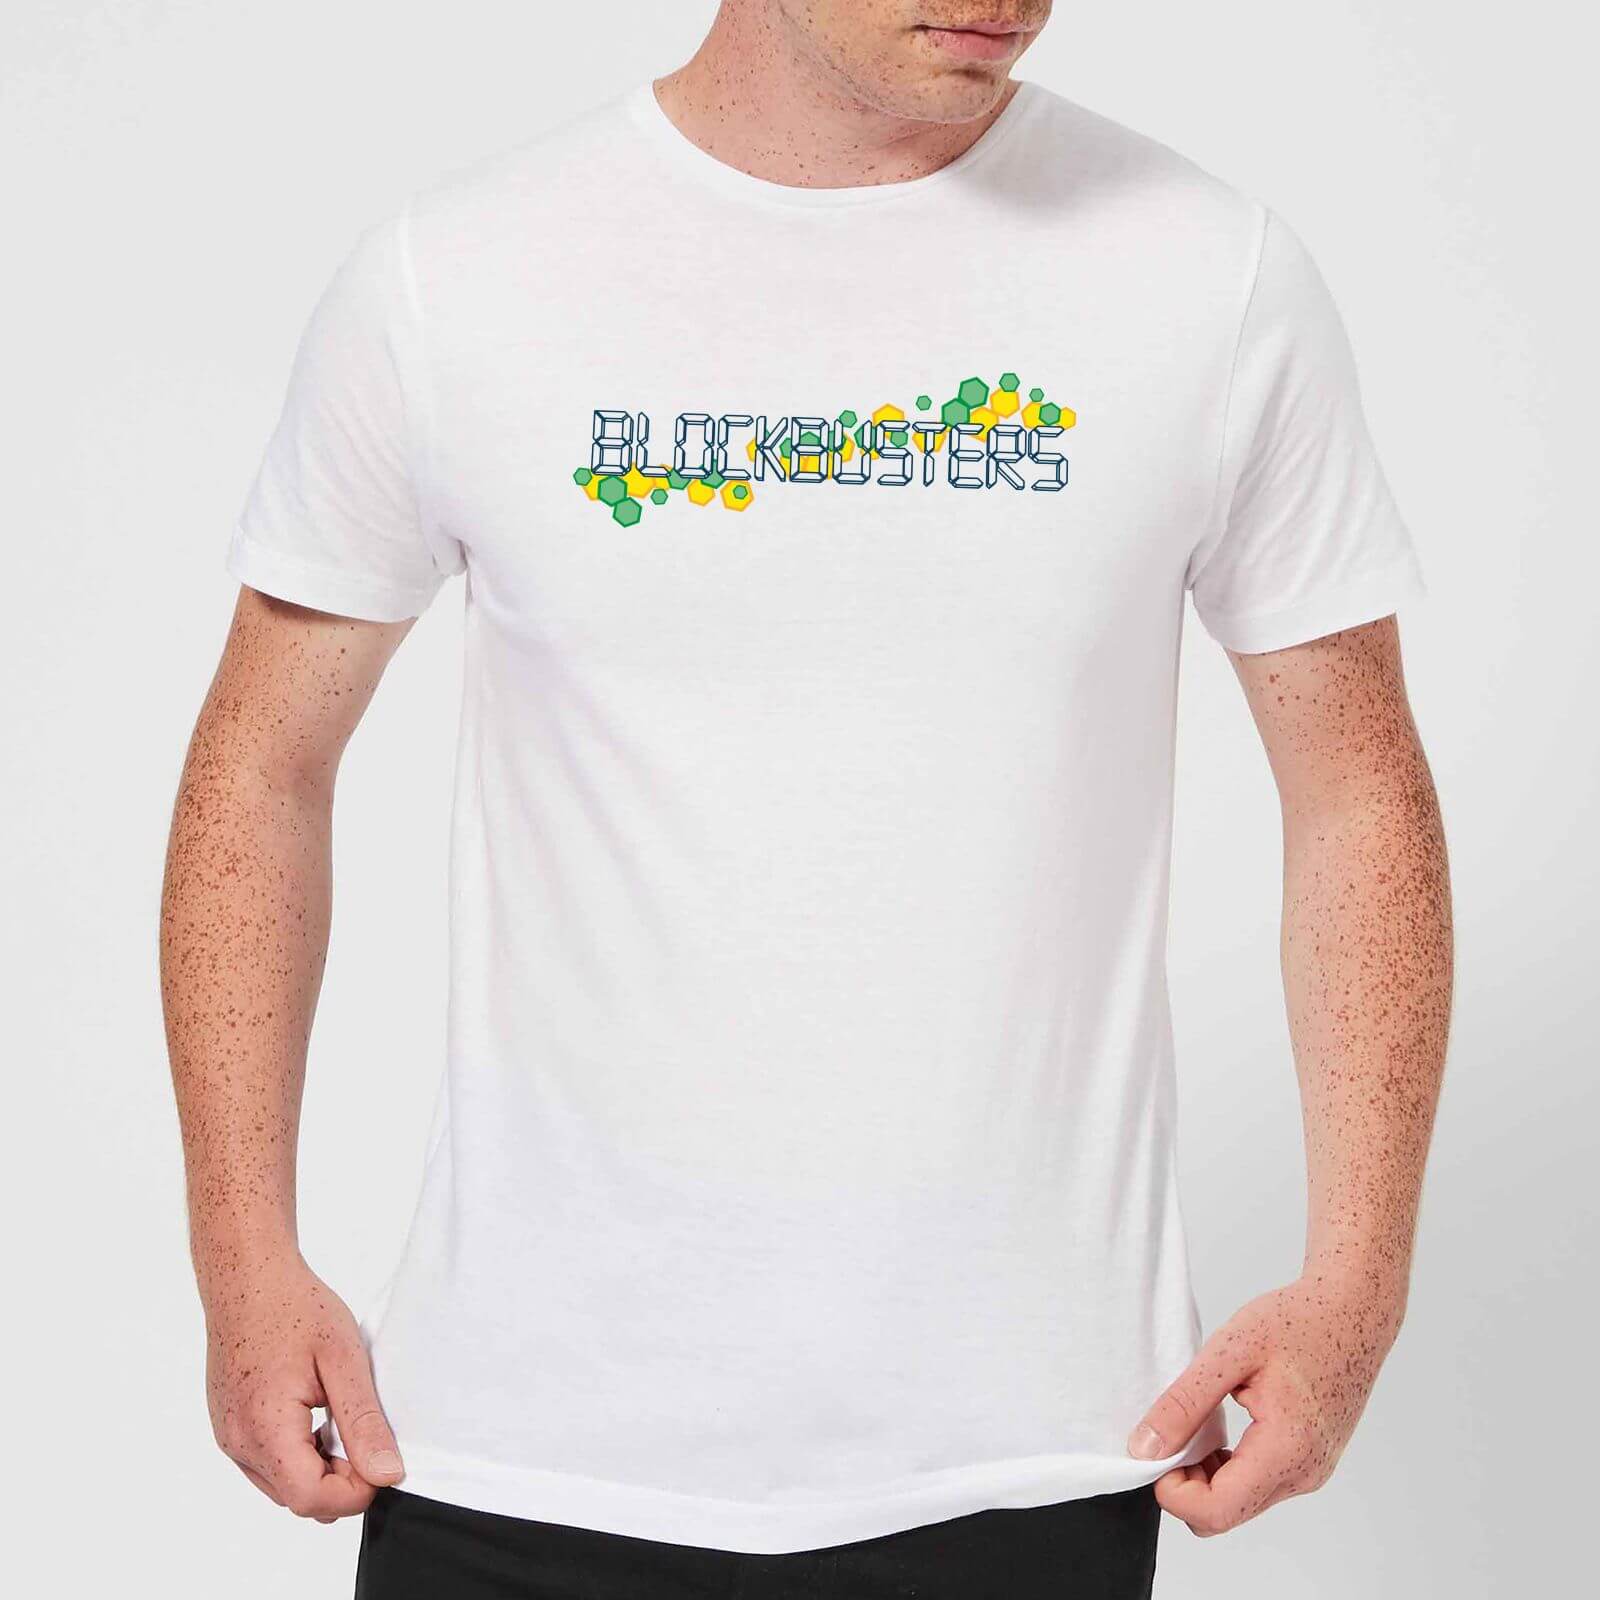 Blockbusters Pattern Logo Men's T-Shirt - White - S - White